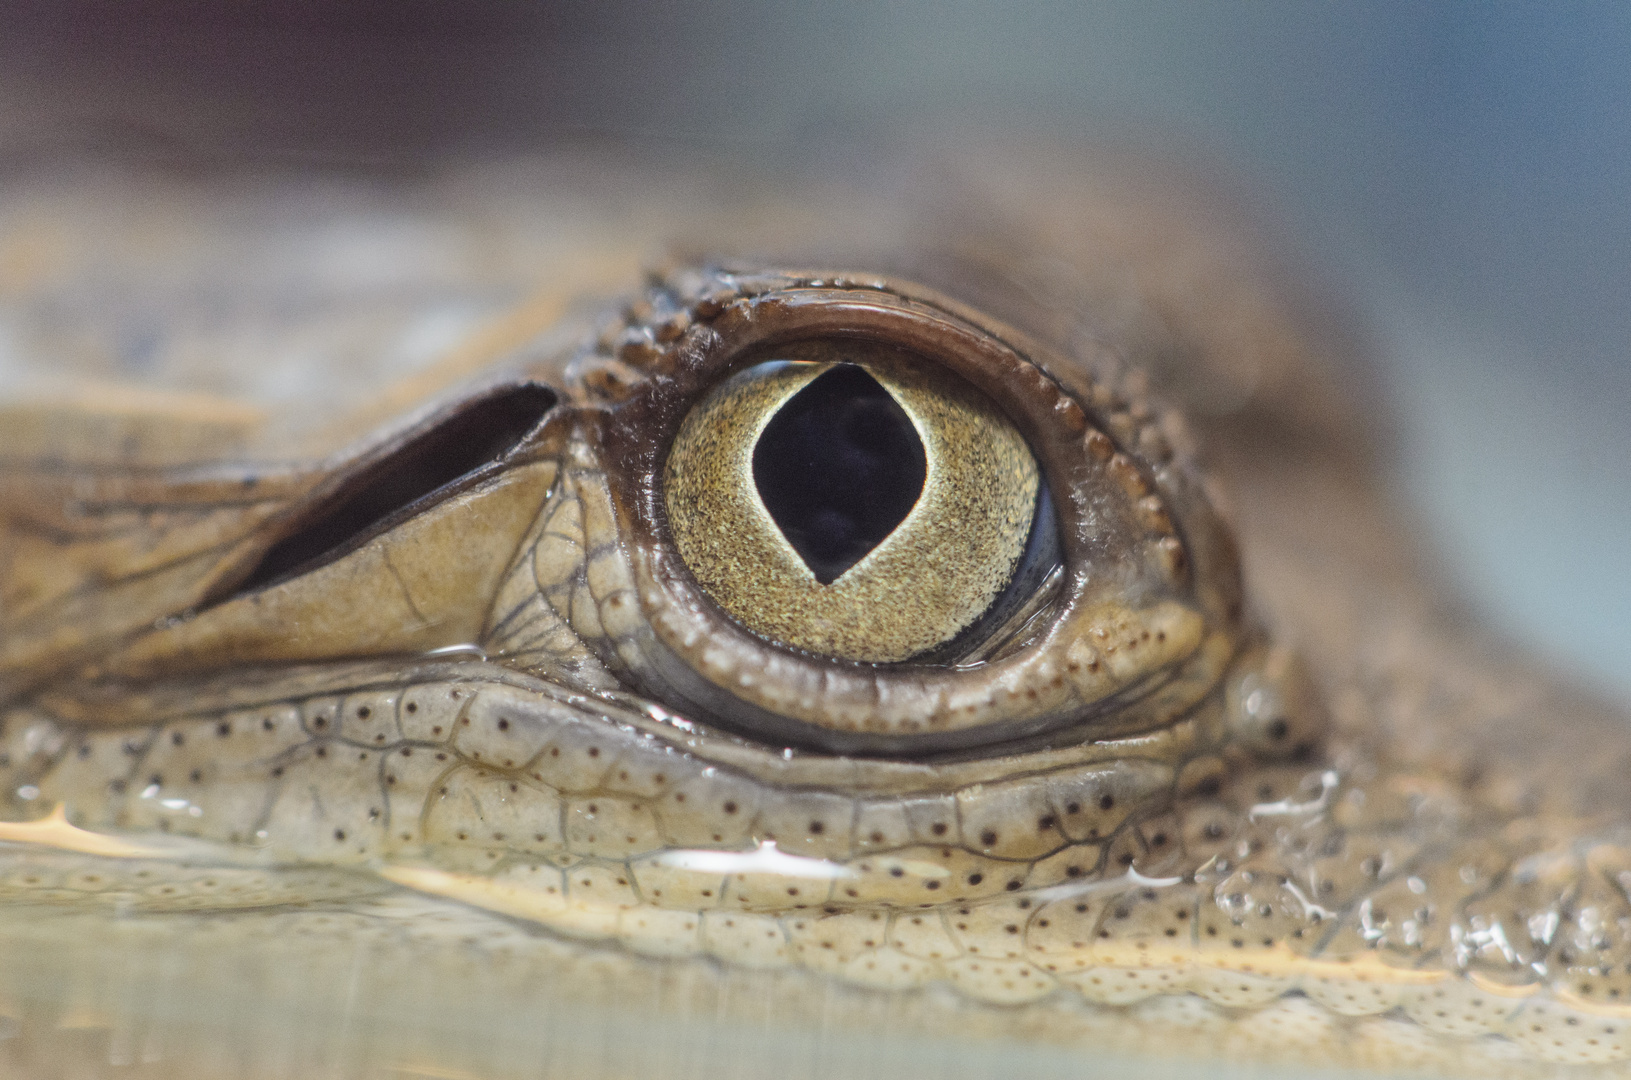 OJO DE CAIMAN (Crocodylus acutus)